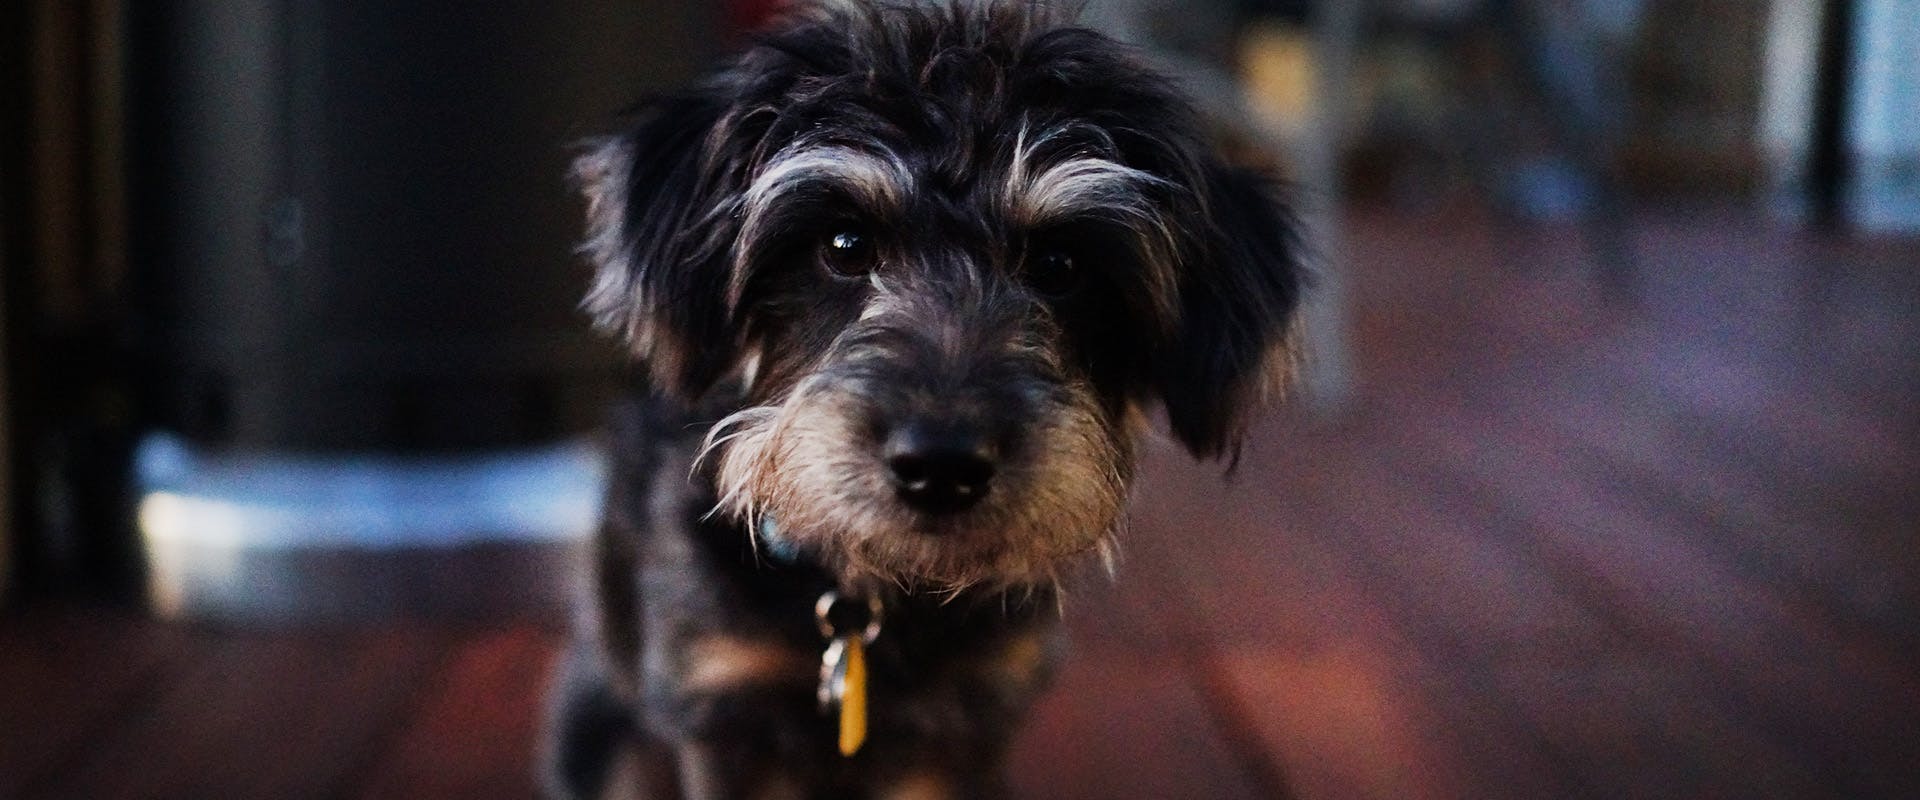 A cute Yorkiepoo puppy standing in a dark living room